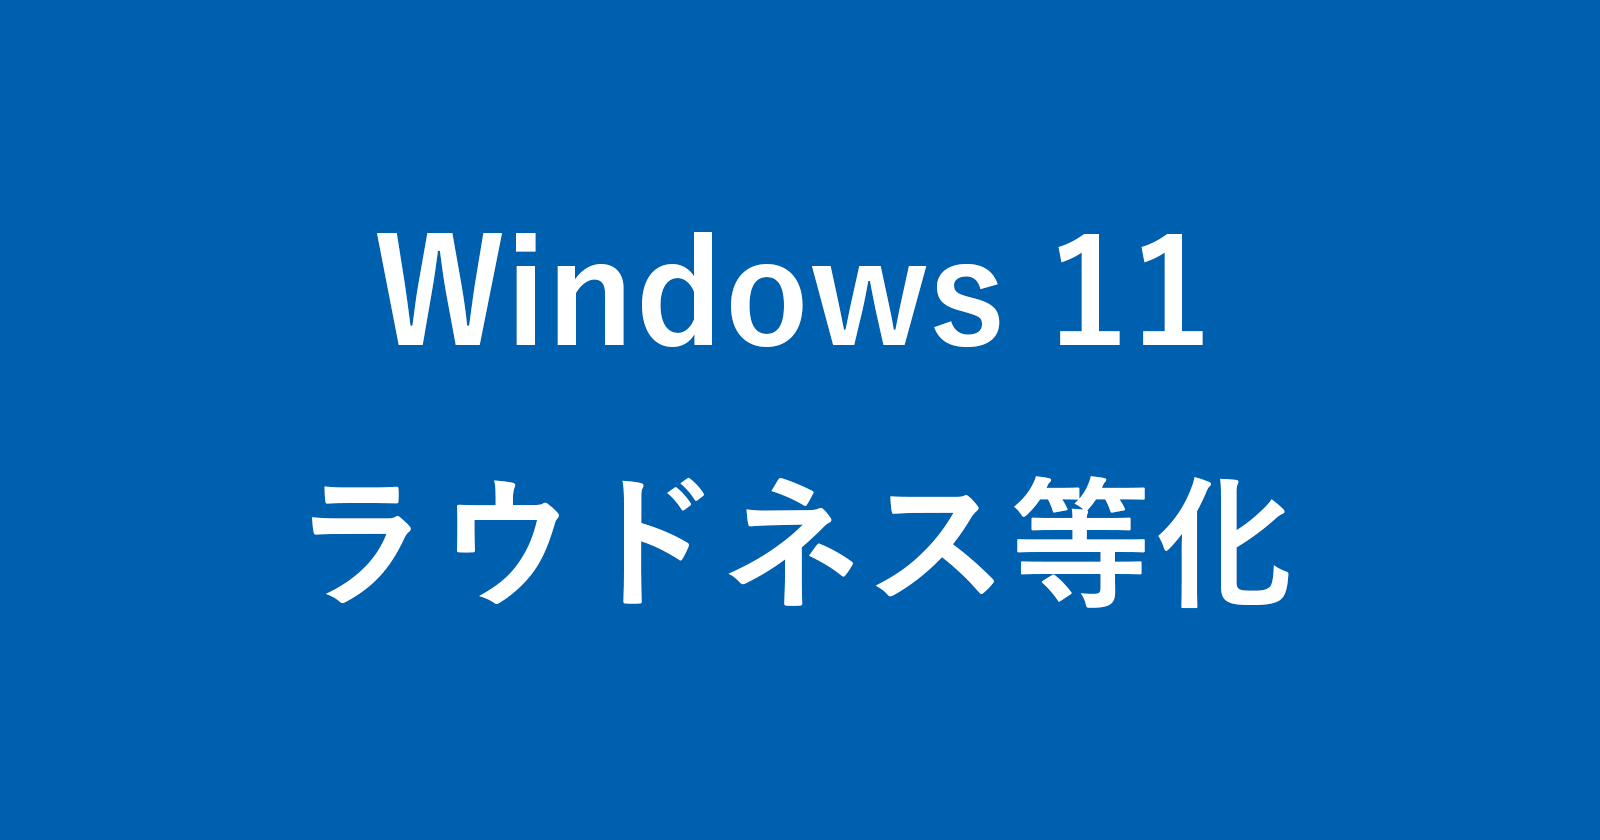 windows 11 loudness